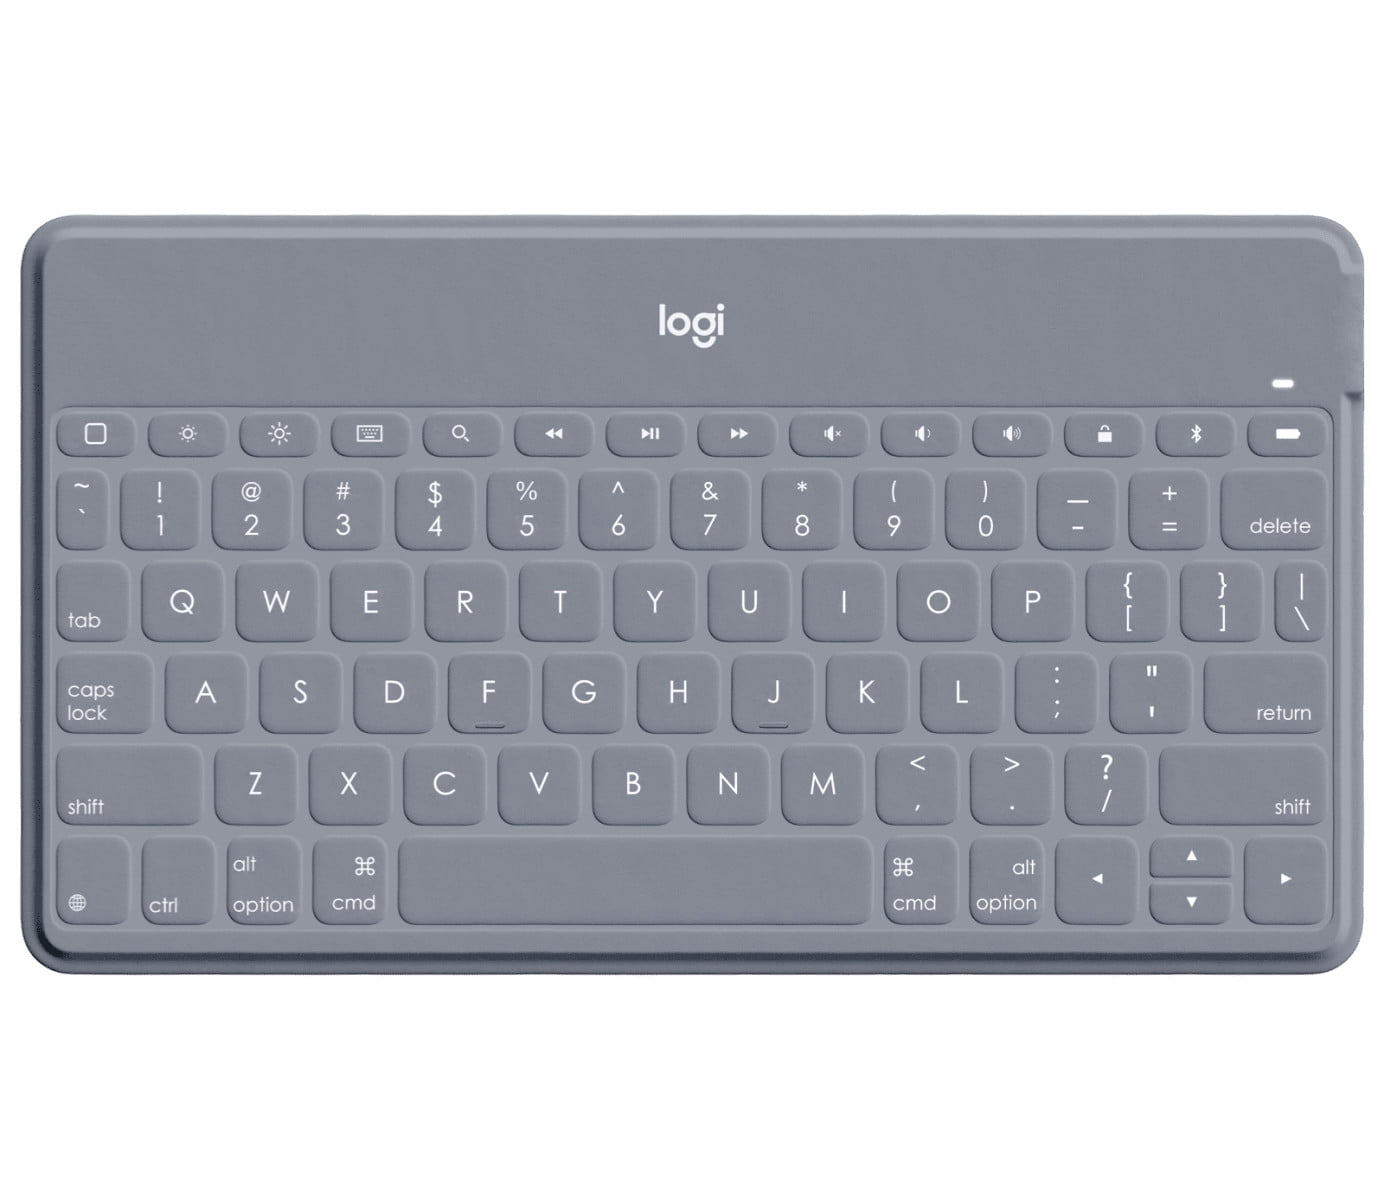 Levering Verbeelding Hoogland Laser Bluetooth Keyboard